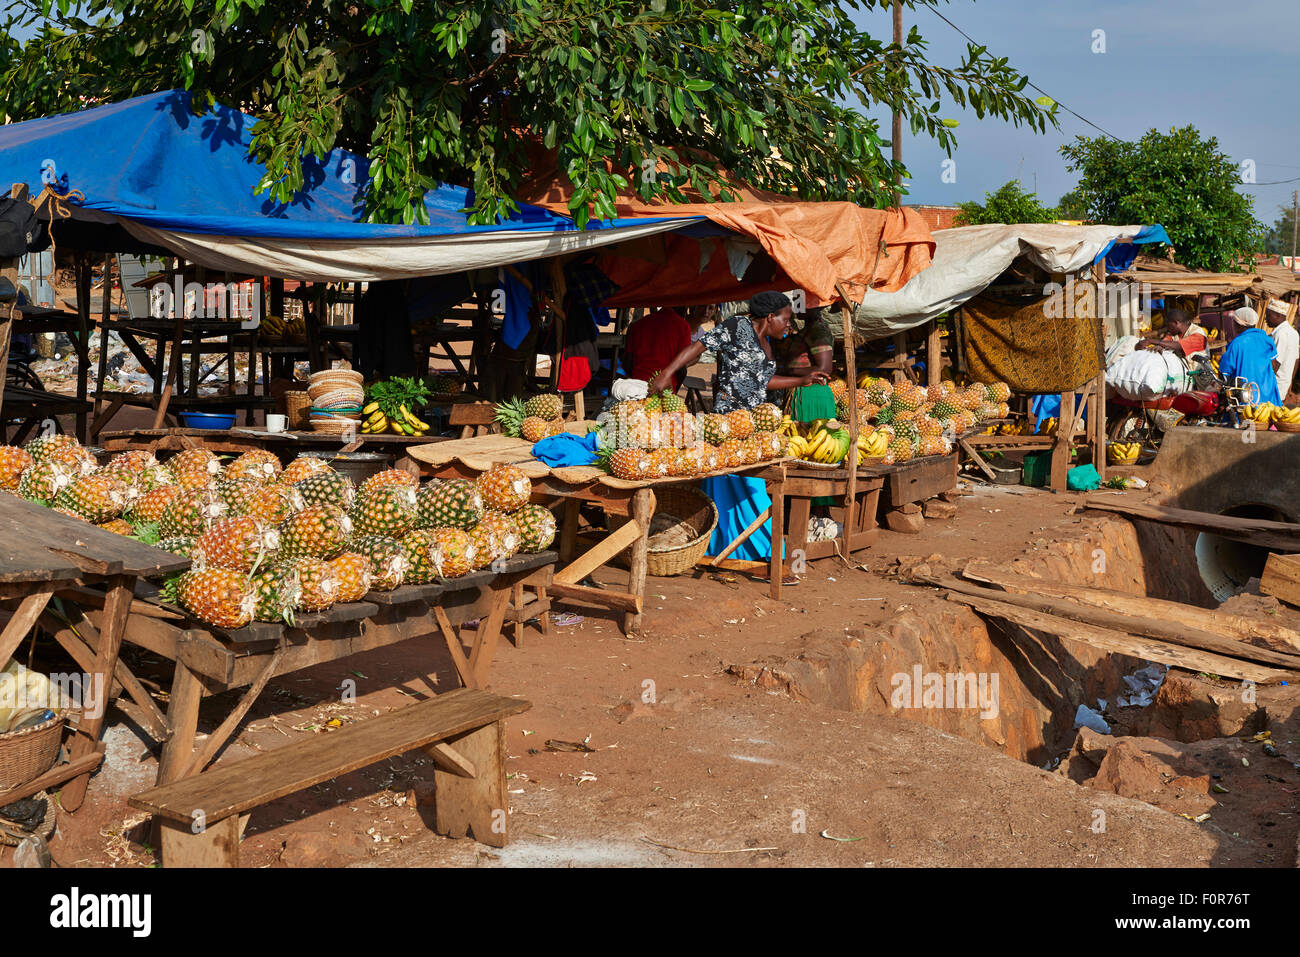 market stalls with pineapple and bananas, Uganda, Africa Stock Photo